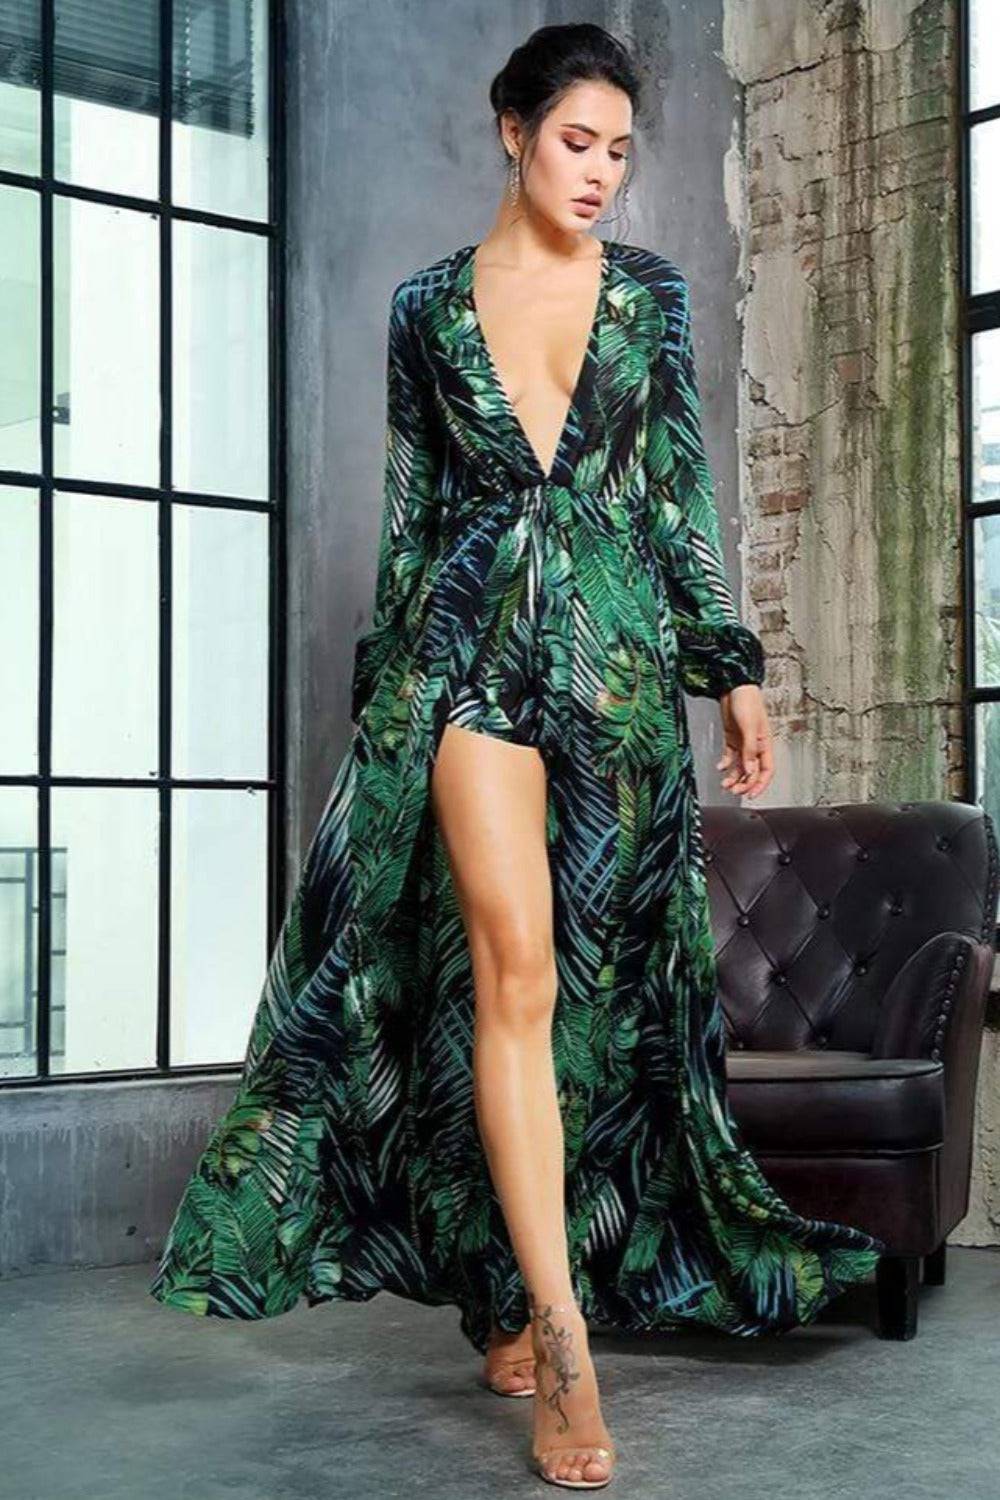 Jennifer Jungle Leaf Print Chiffon Bodysuit Dress - TGC Boutique - Bodycon Dress